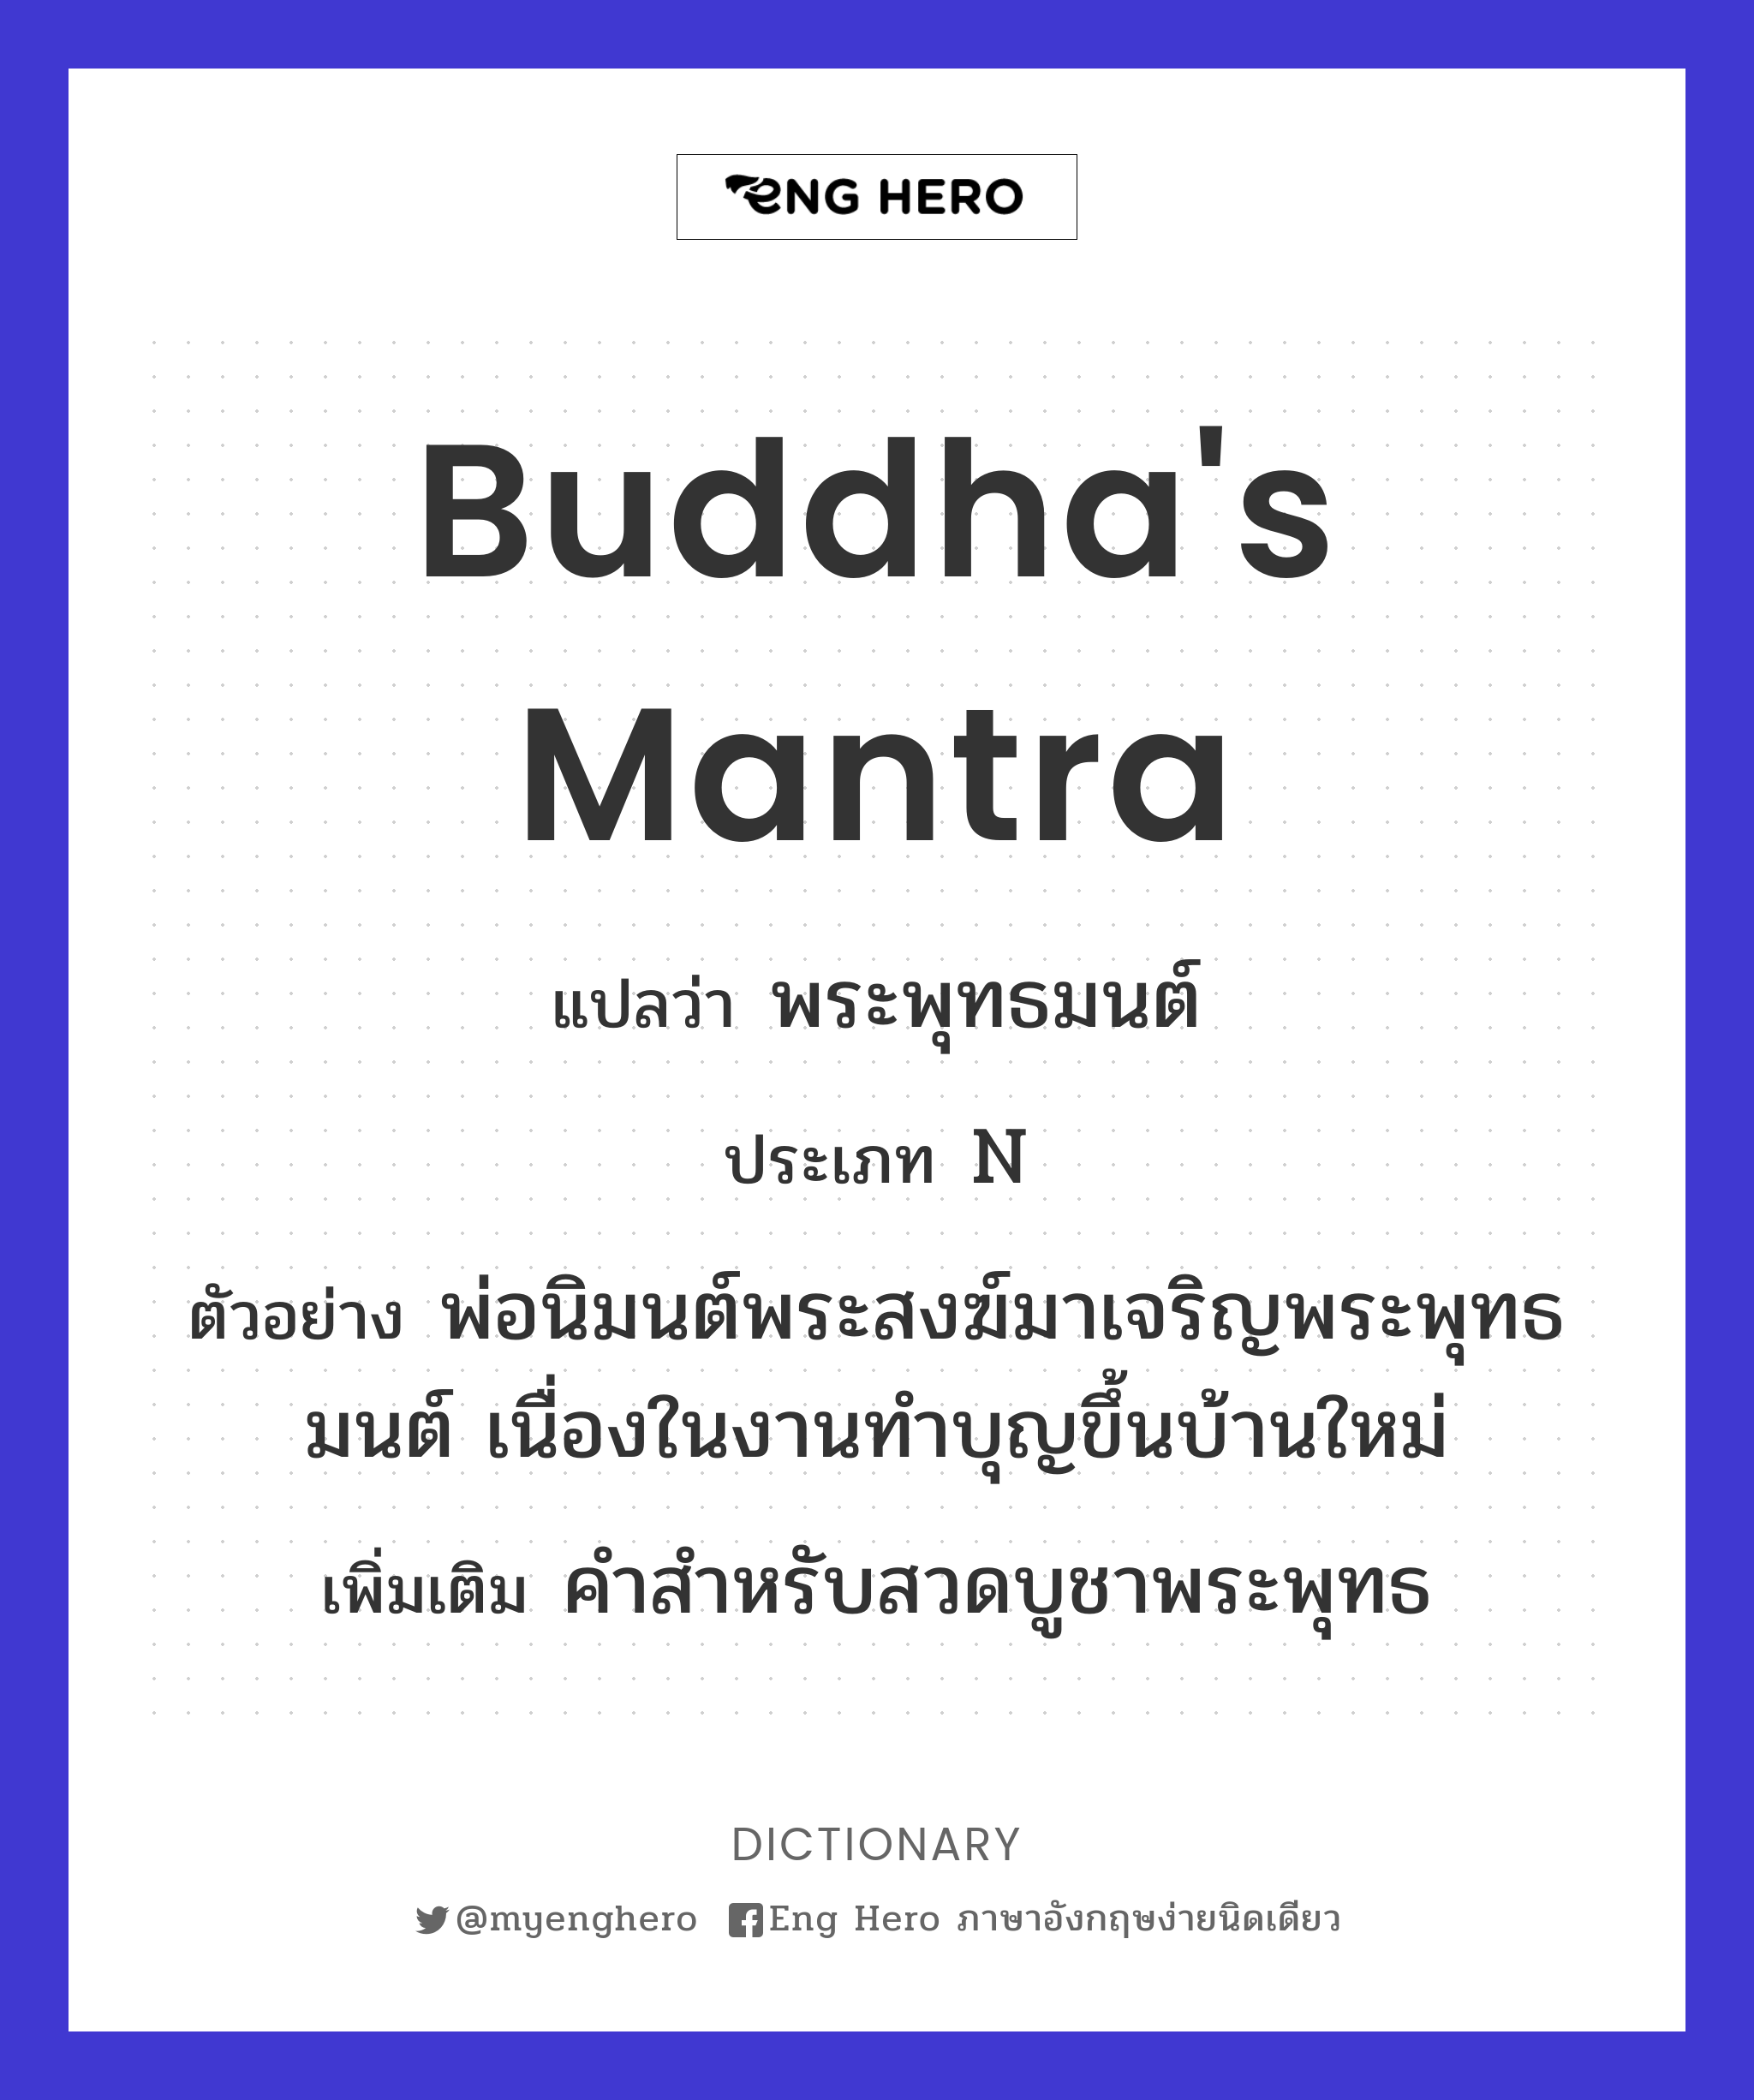 Buddha's mantra